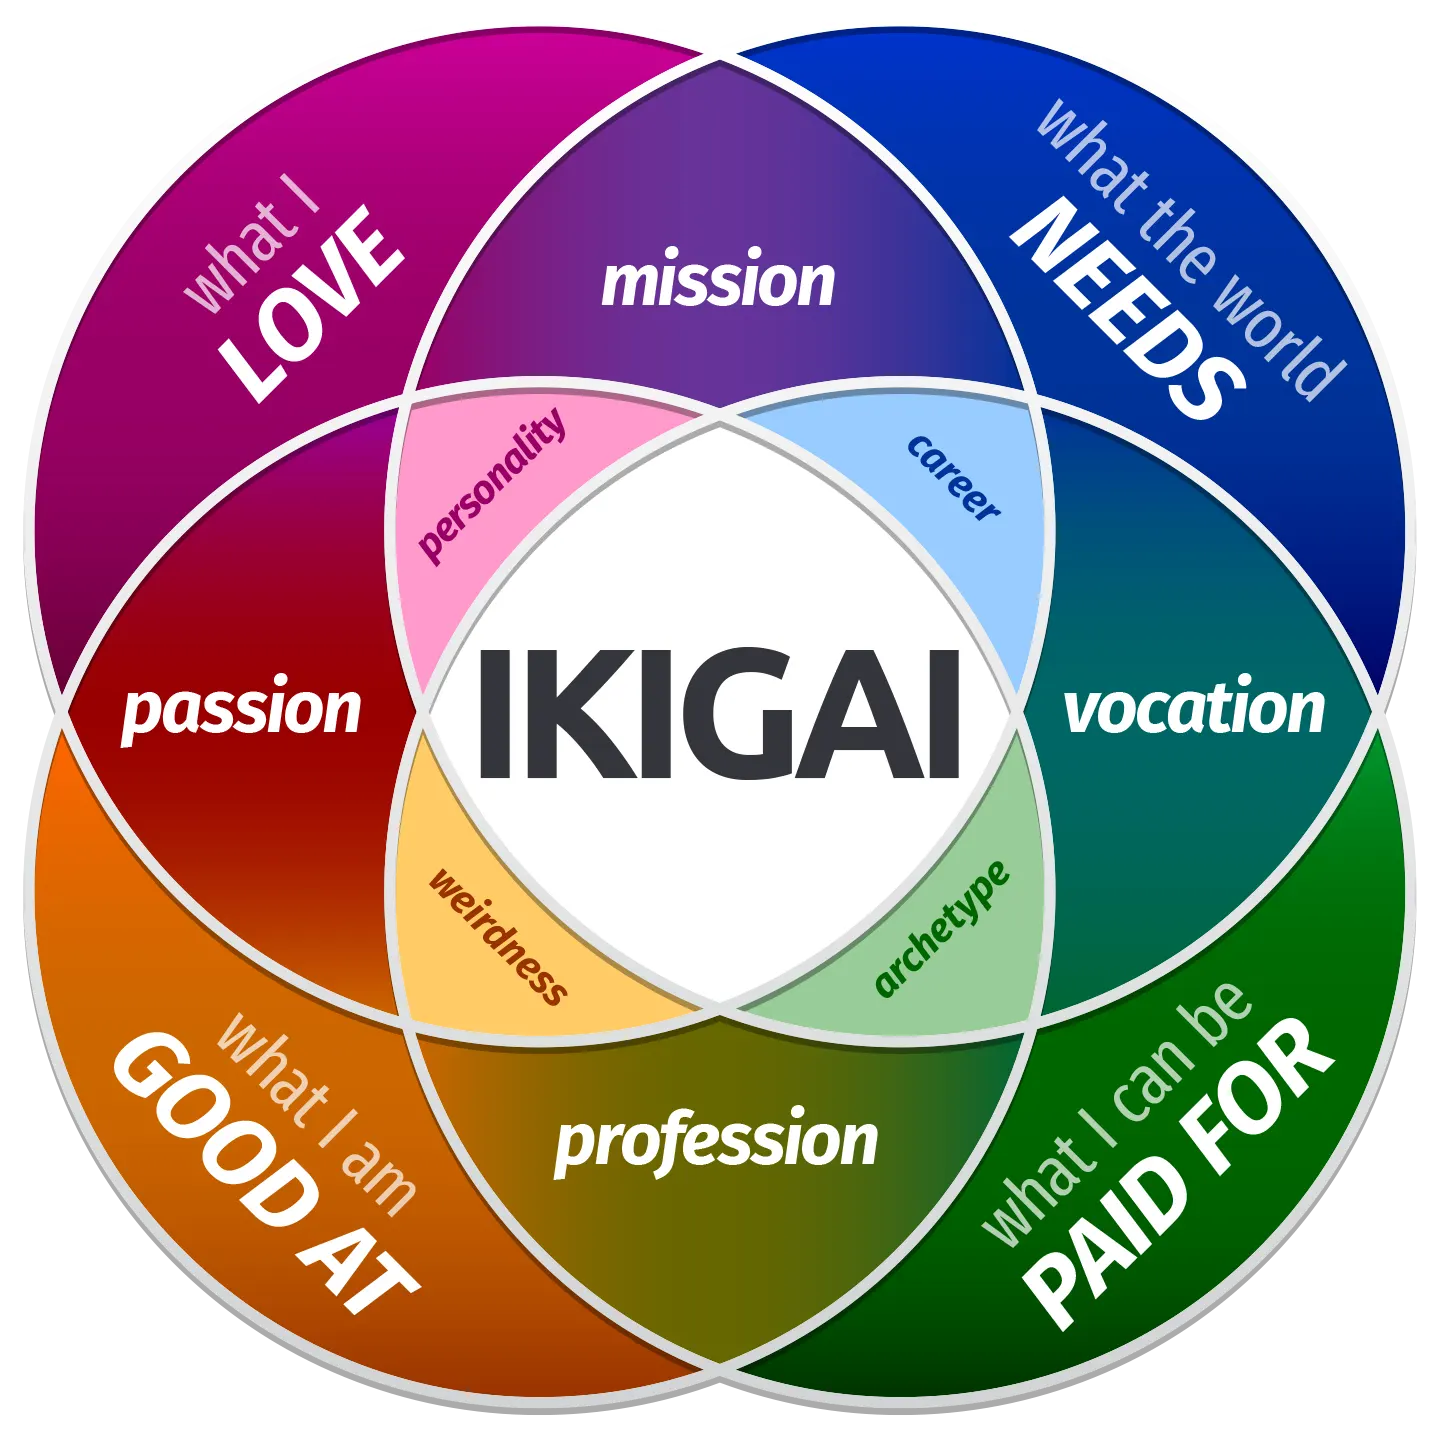 IKIGAI personality test free online